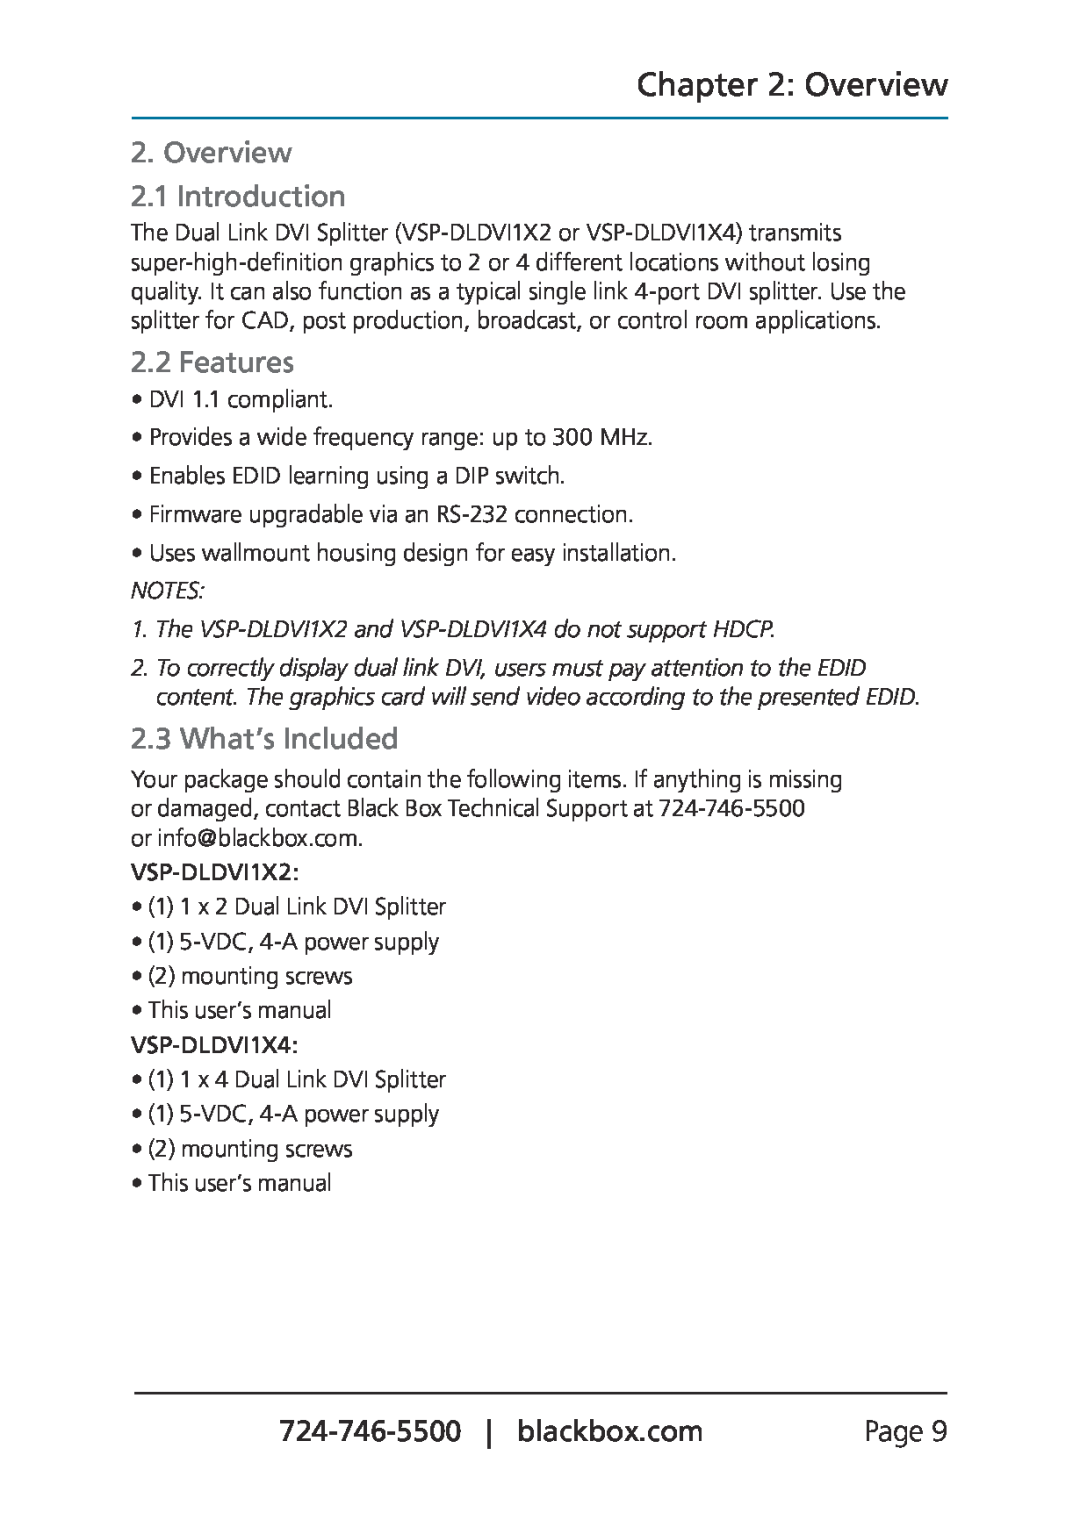 Black Box Dual Link DVI Splitters, VSP-DLDVI1X4, VSP-DLDVI1X2 manual Overview 2.1 Introduction, Features, What’s Included 